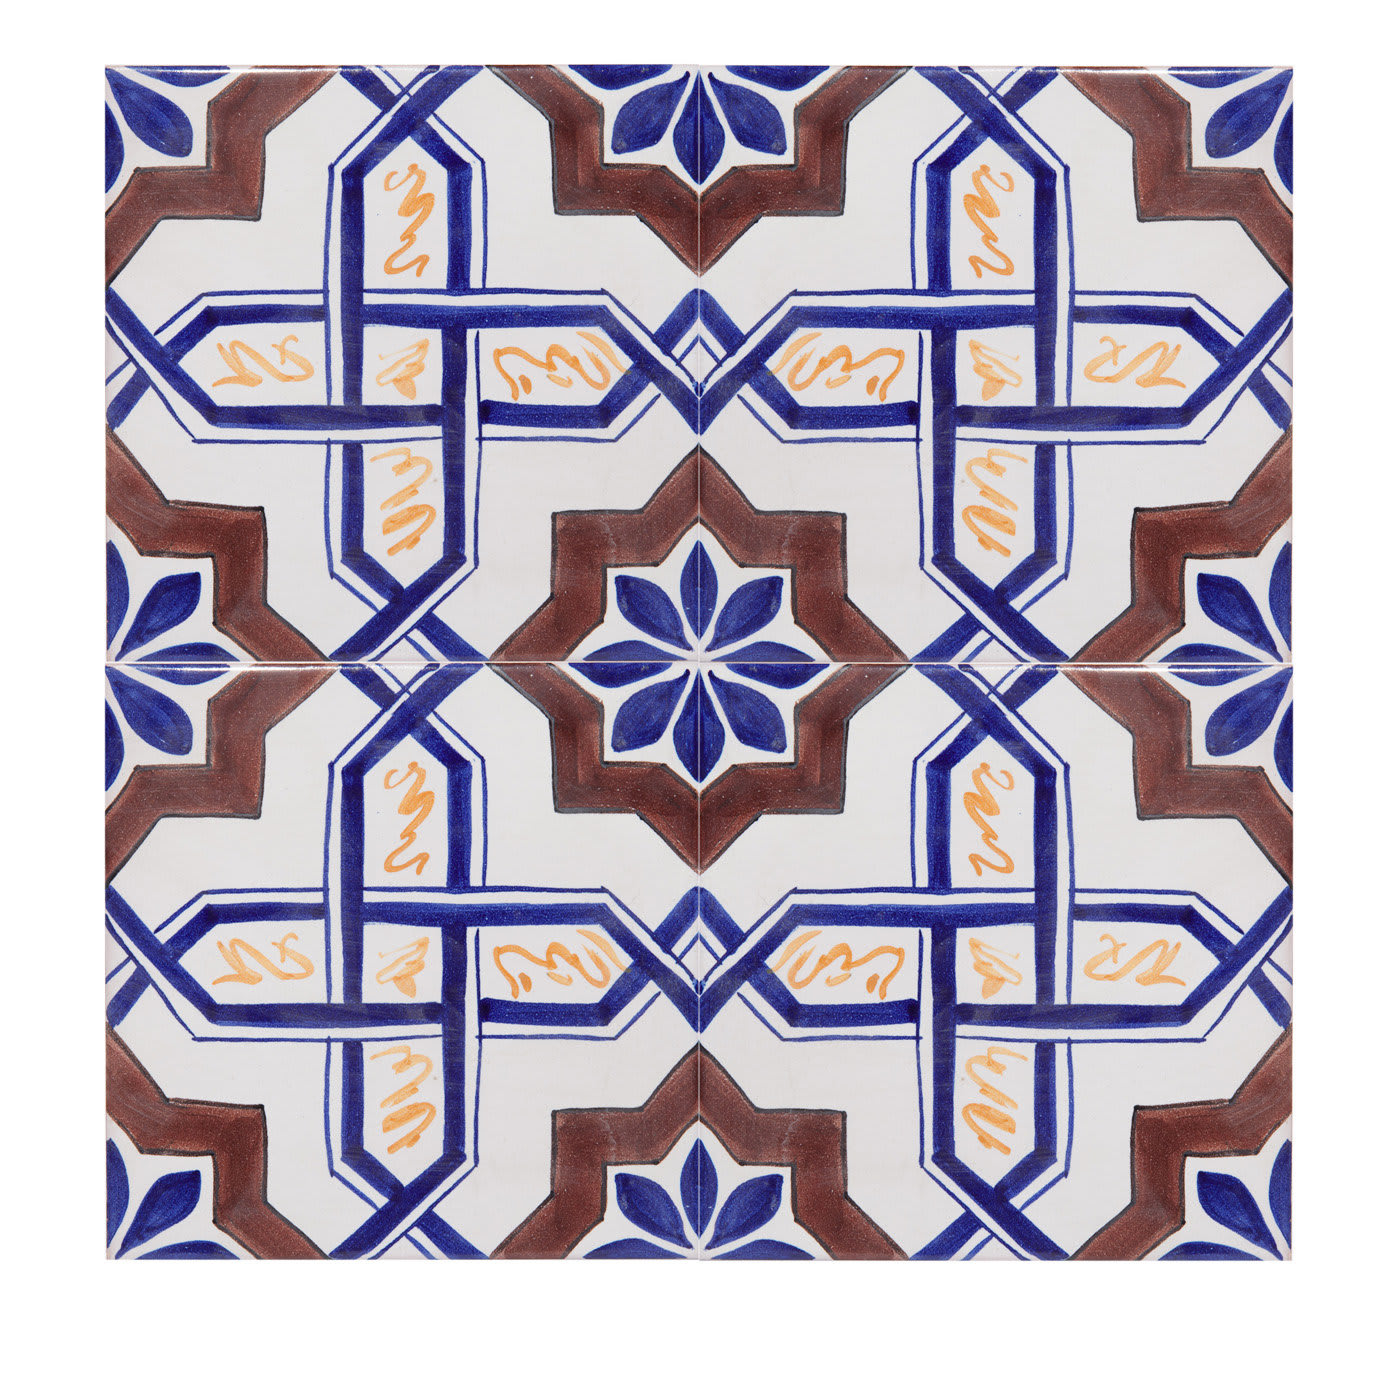 4 Century Cross Tiles - Ceramica Pinto